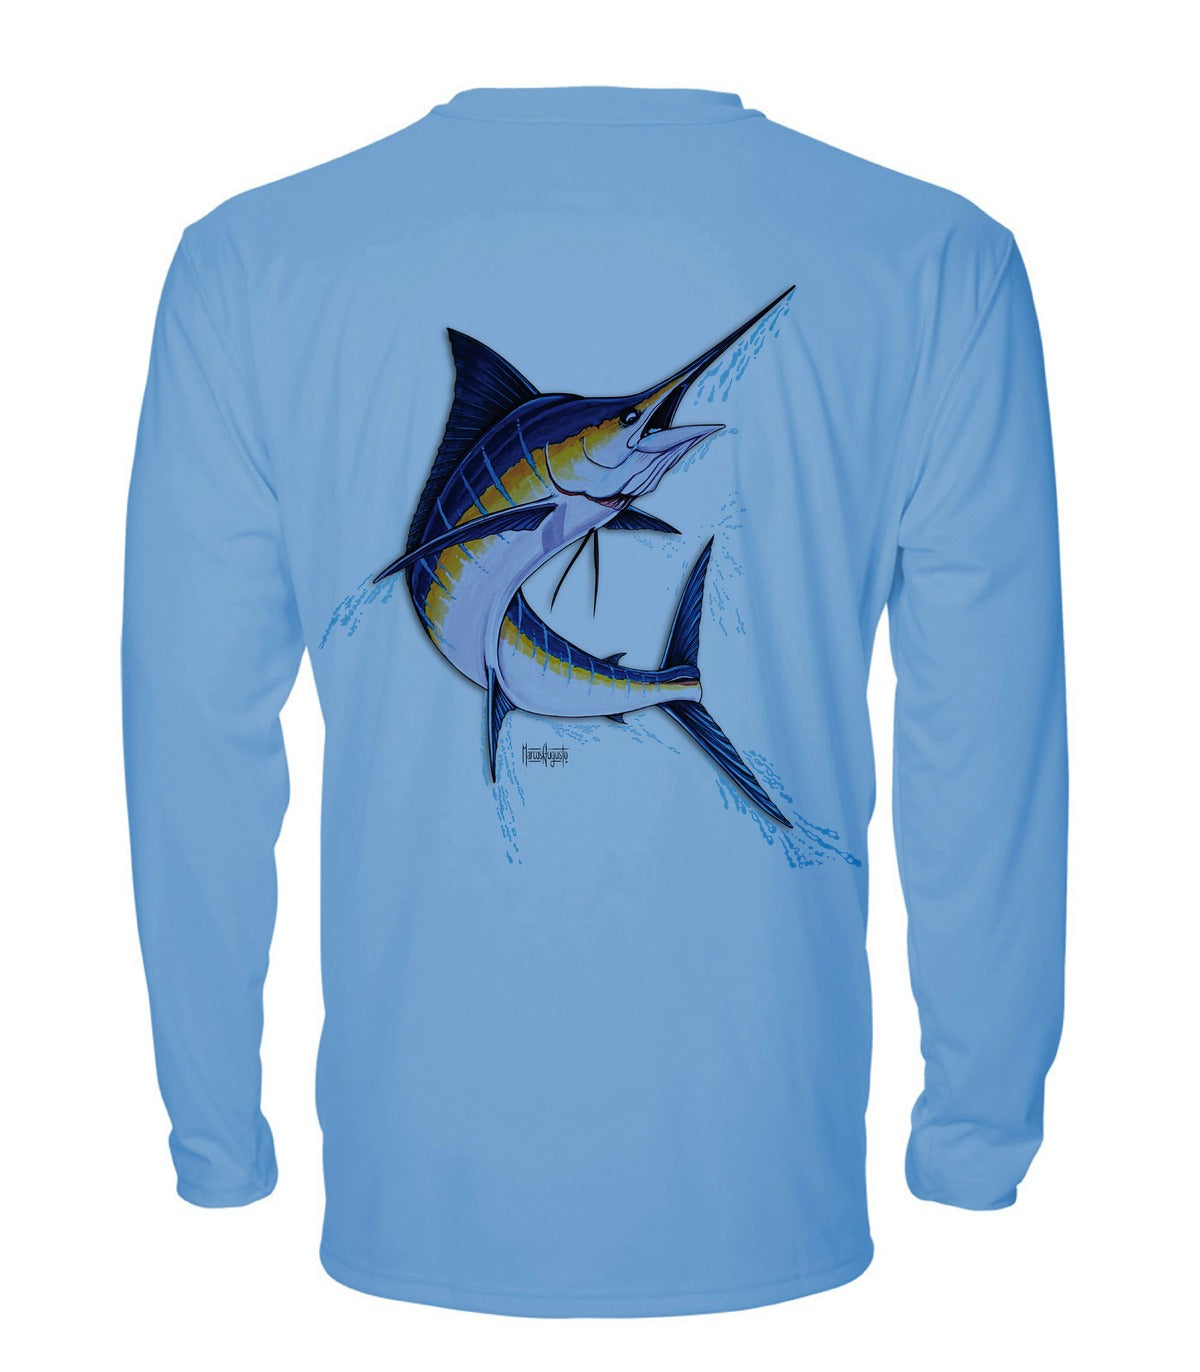 Marlin - Long Sleeve ProtectUV® Sun Protective Shirt